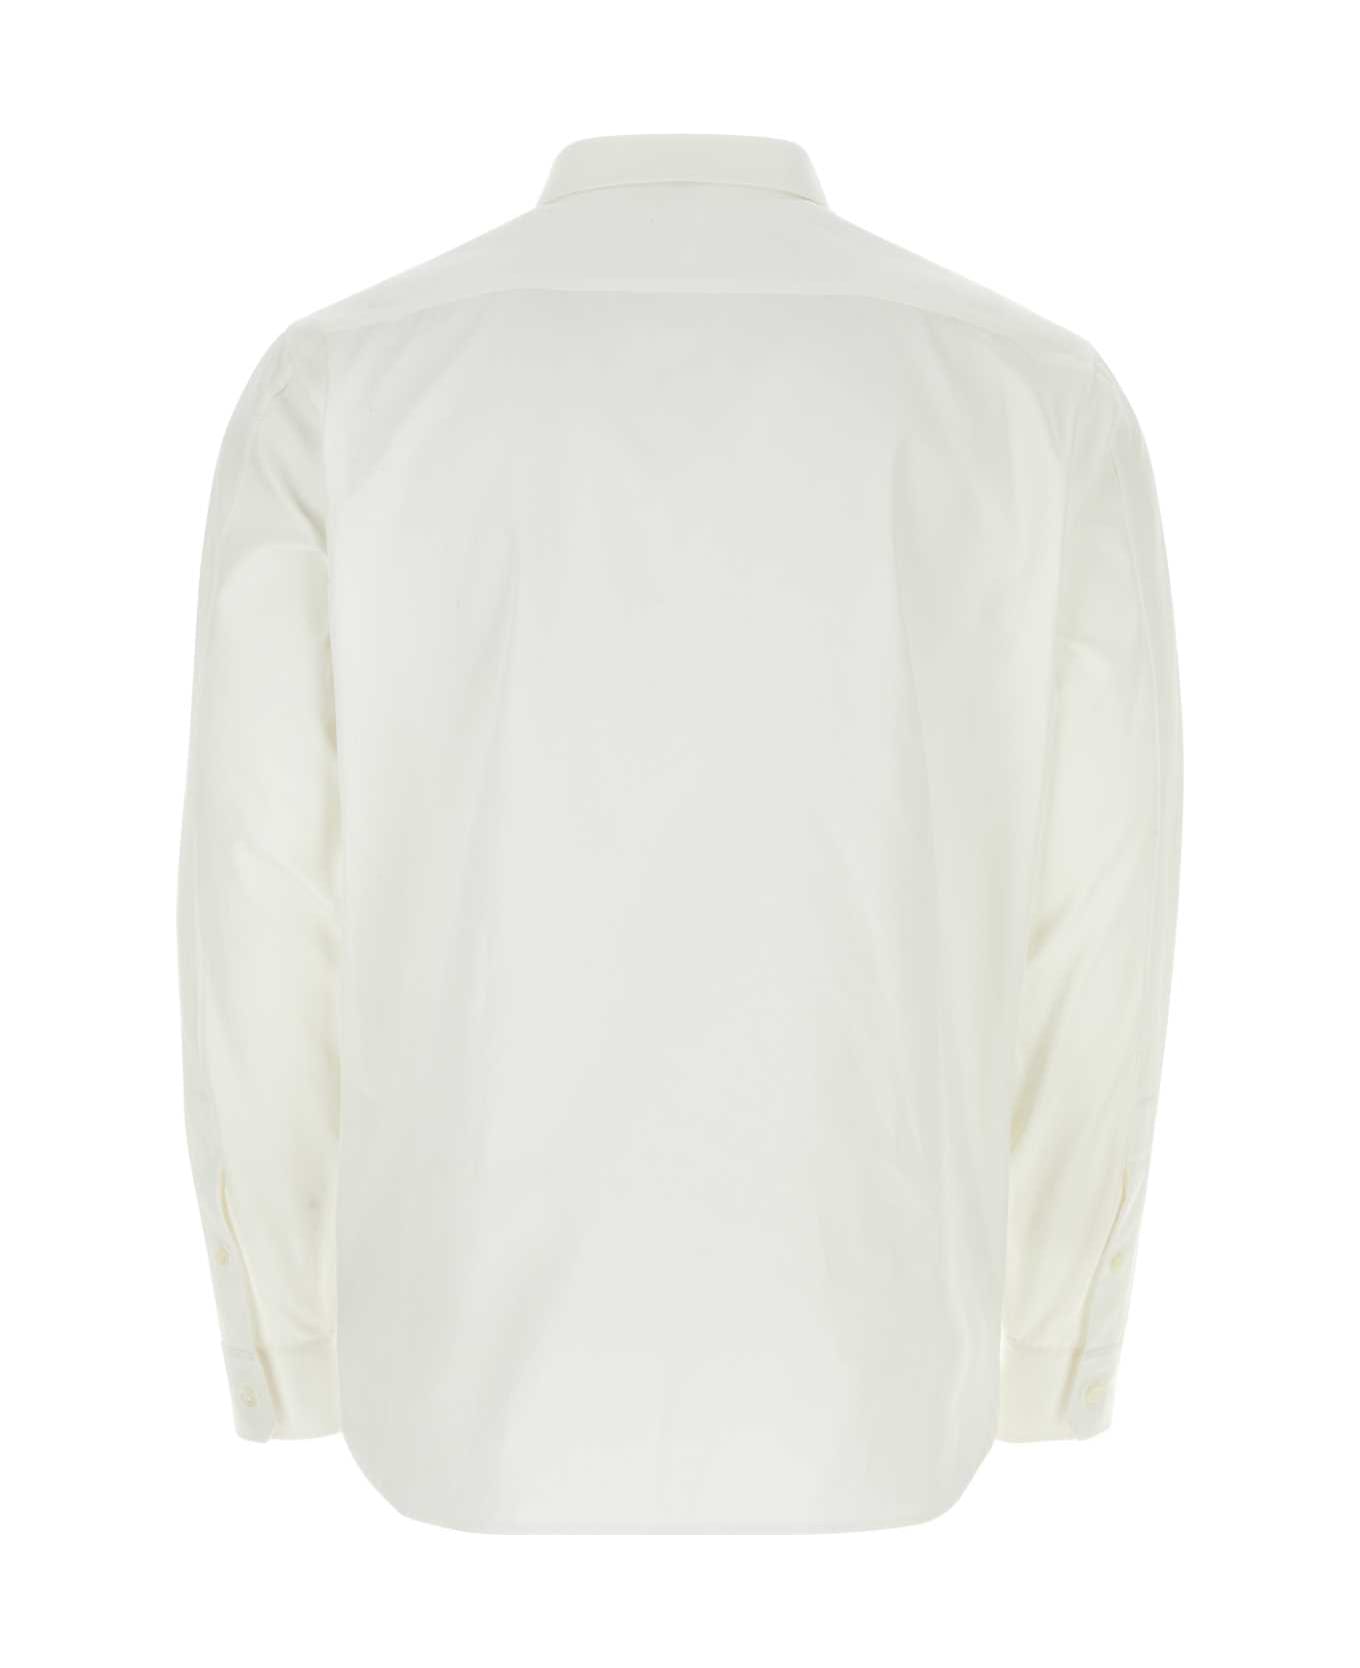 Loewe White Cotton Shirt - WHITE